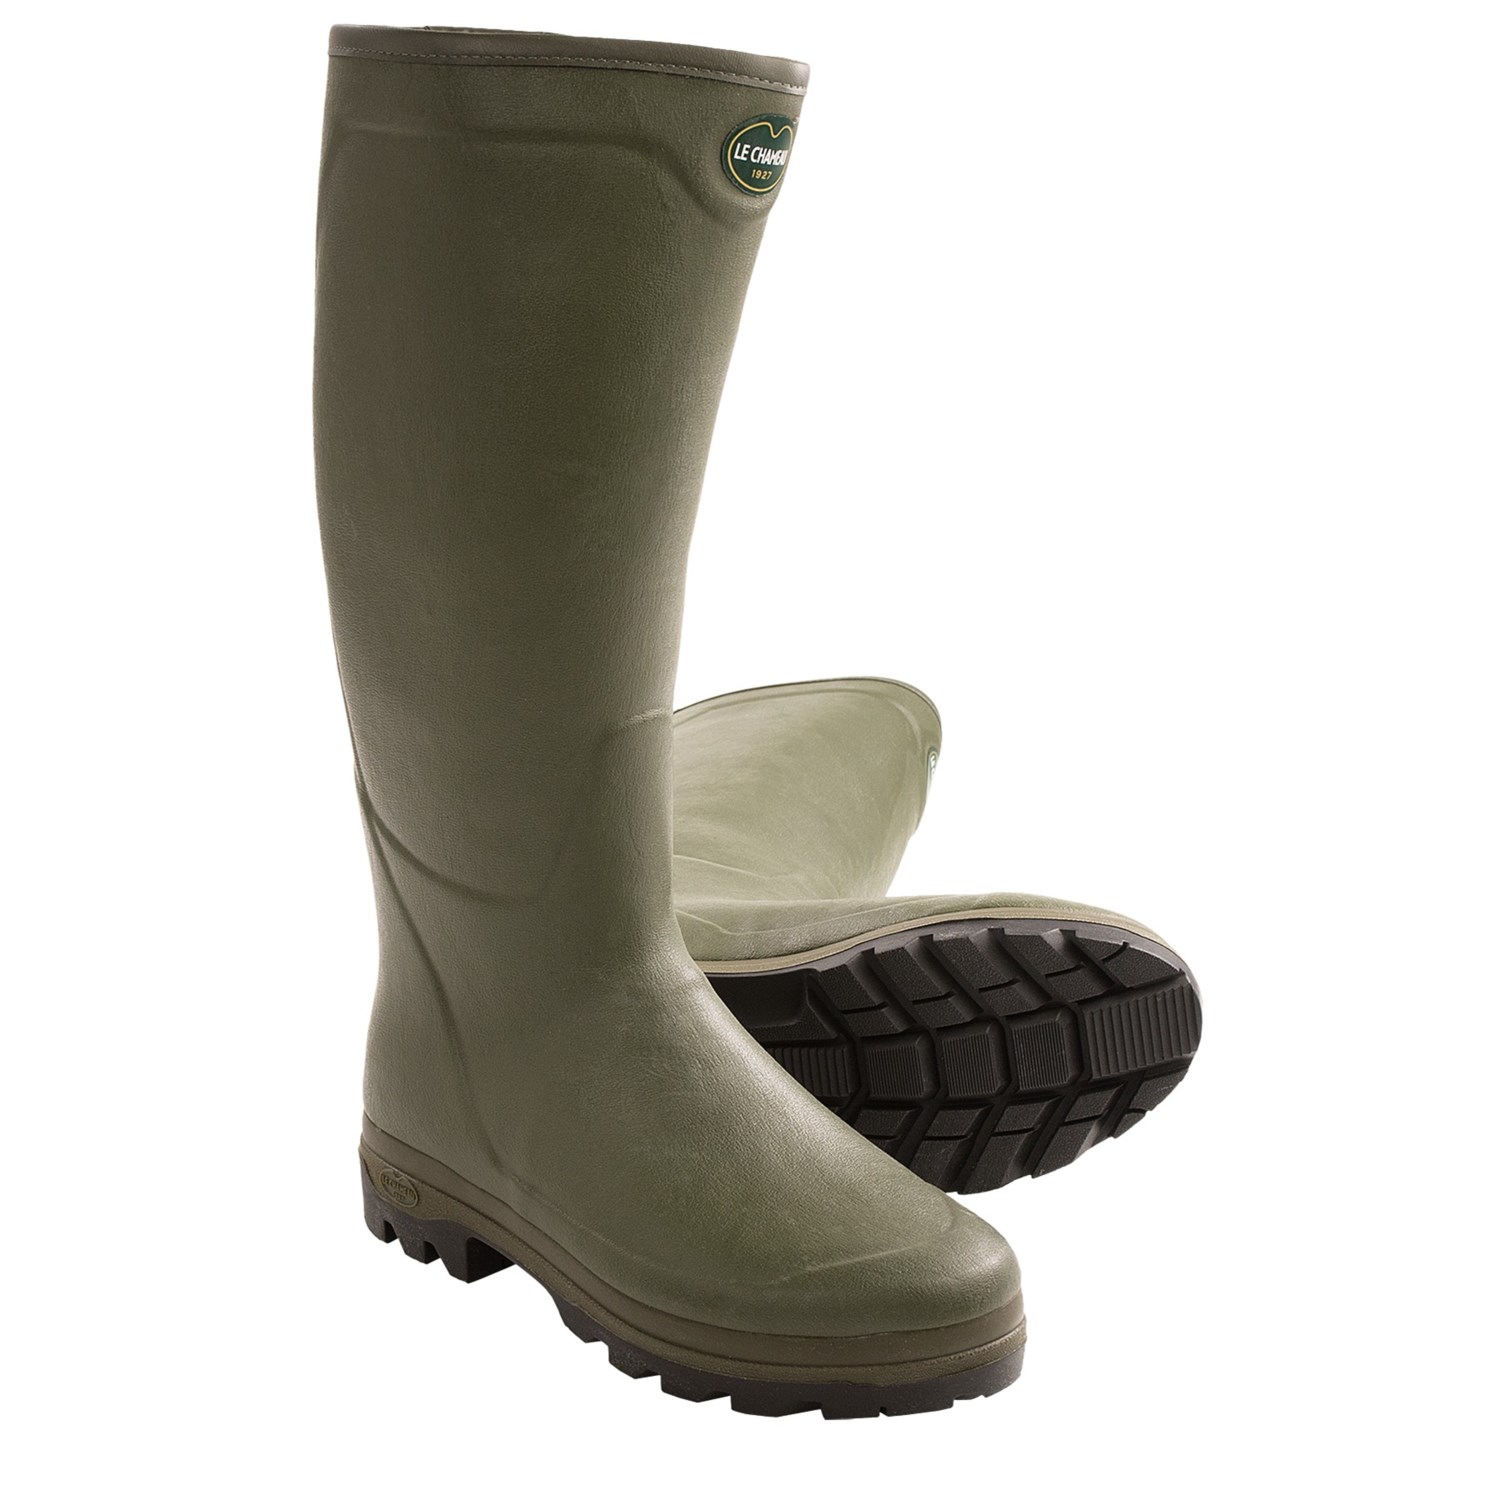 Le Chameau Country Fur XL Rubber Boots (For Men) 8830N - Save 68%